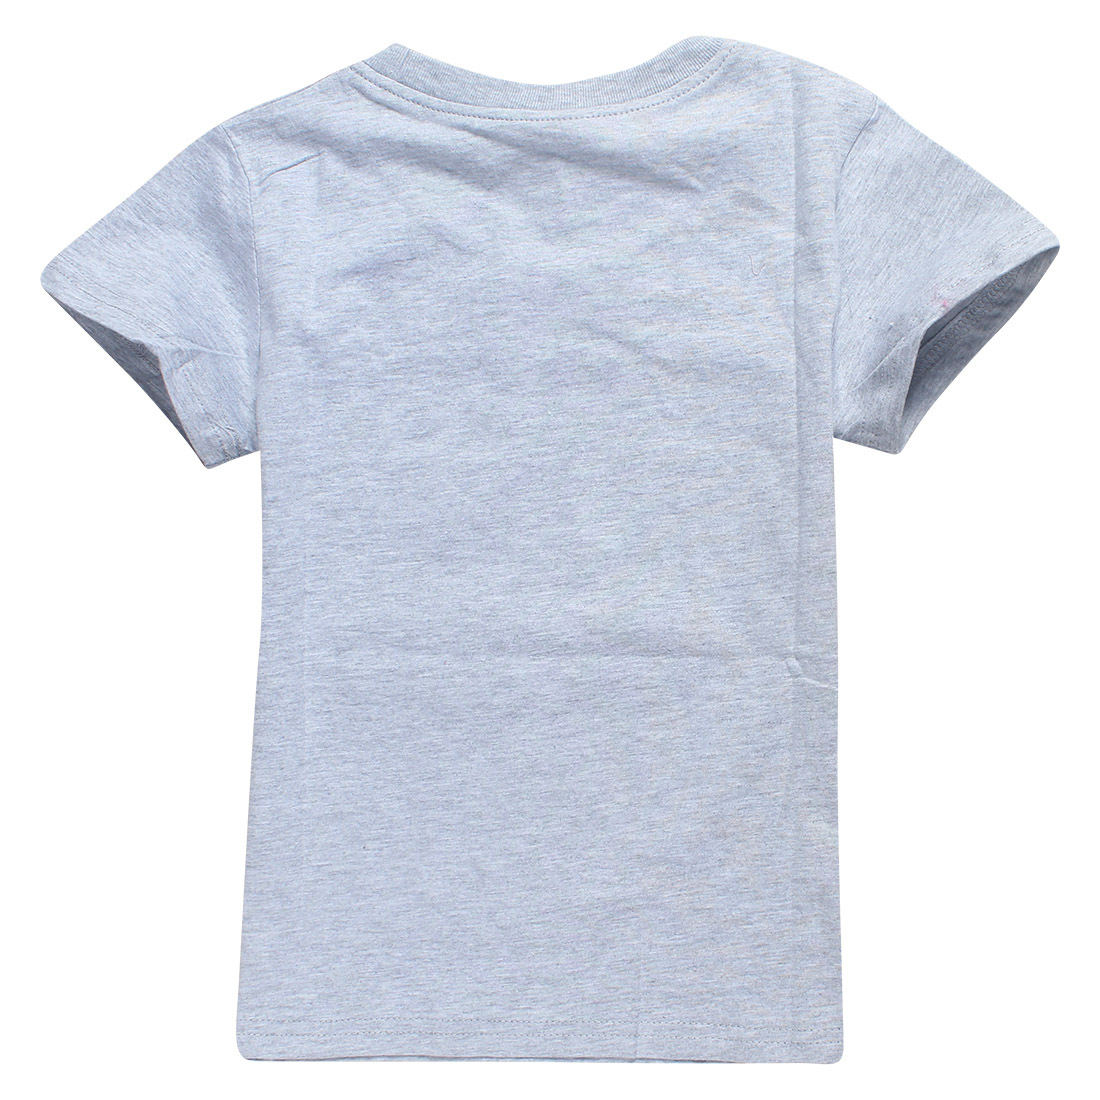 Roblox T Shirts For Kids Eyegemix Com - denim jacket with white roblox t shirt